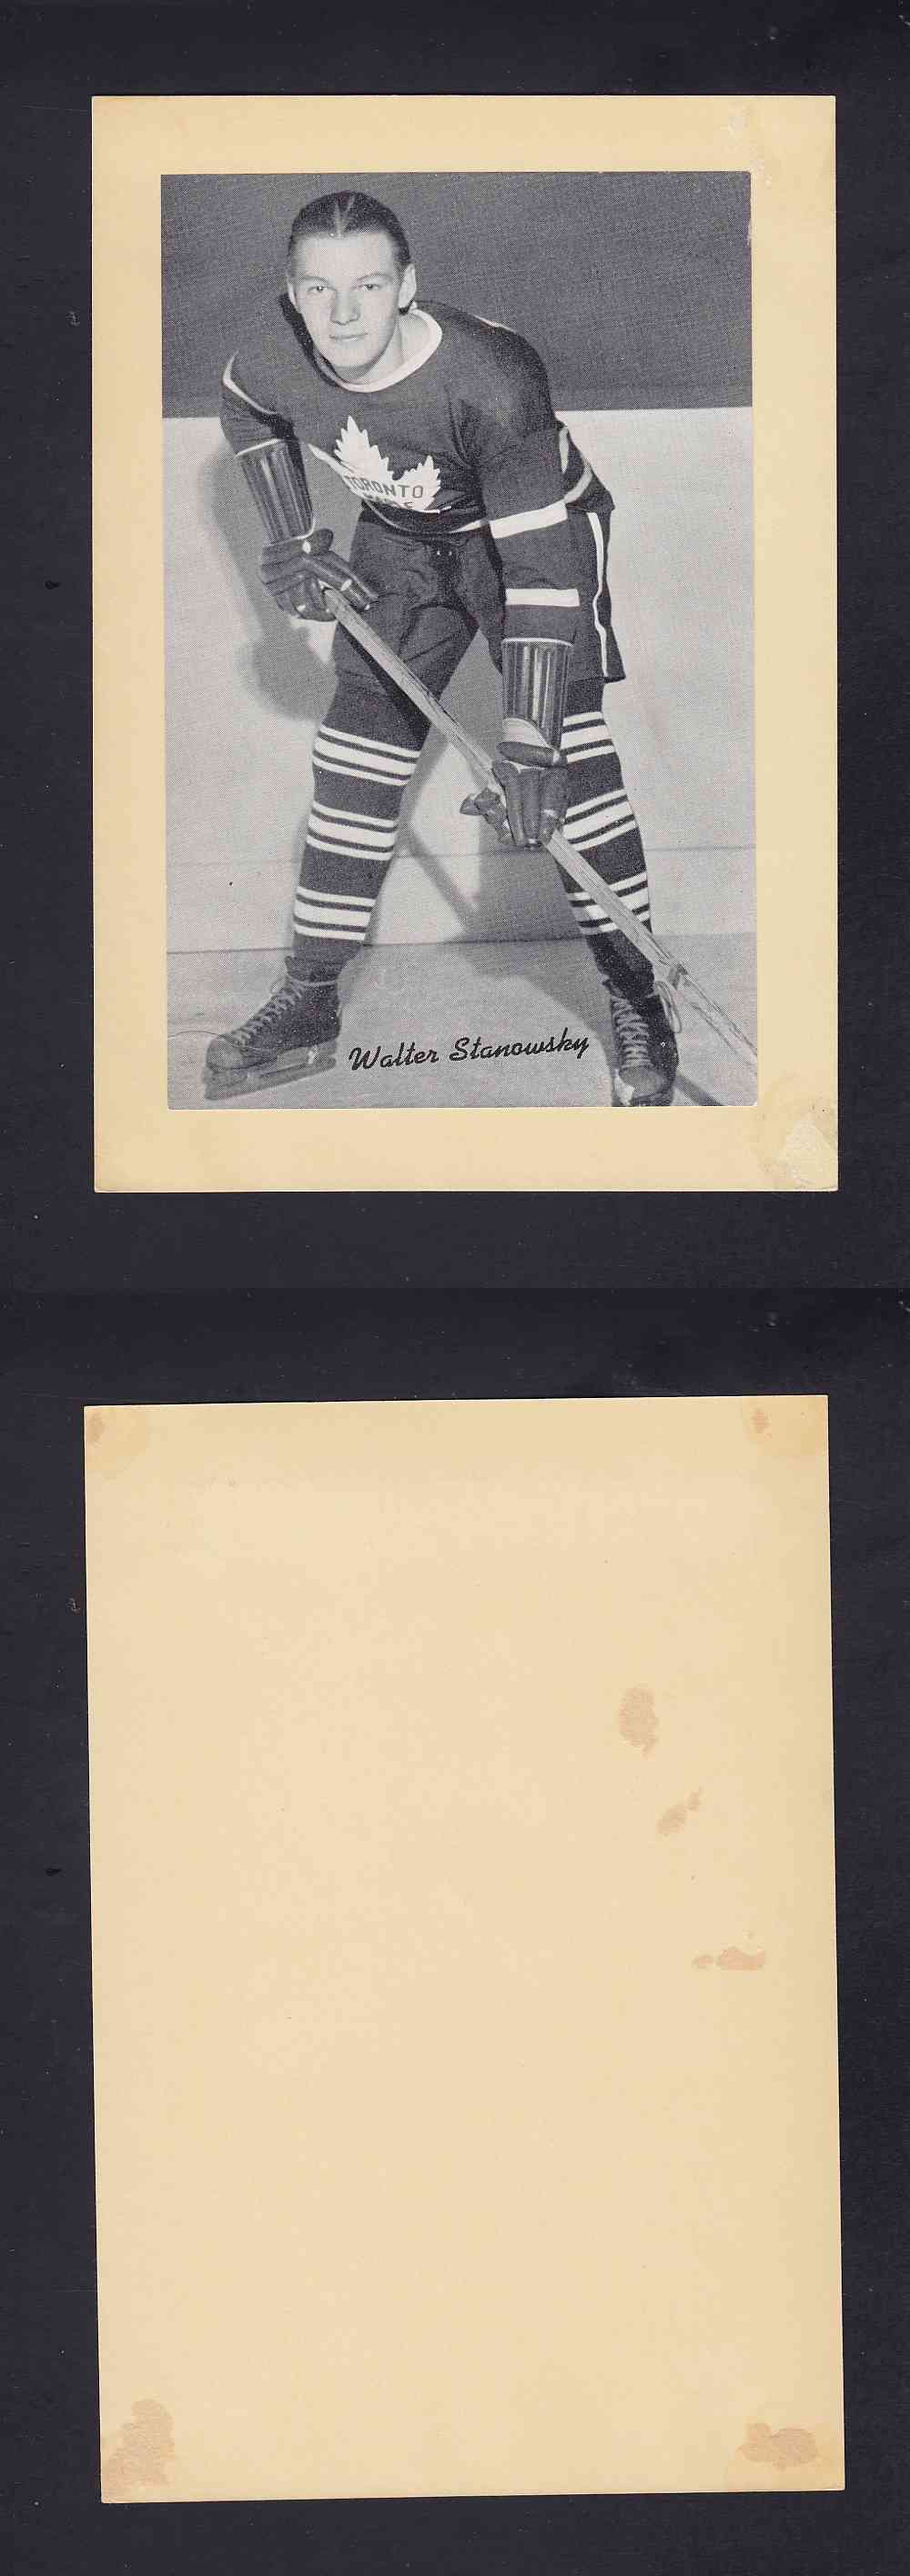 1934-43 BEEHIVE PHOTO GR.1 W. STANOWSKY photo